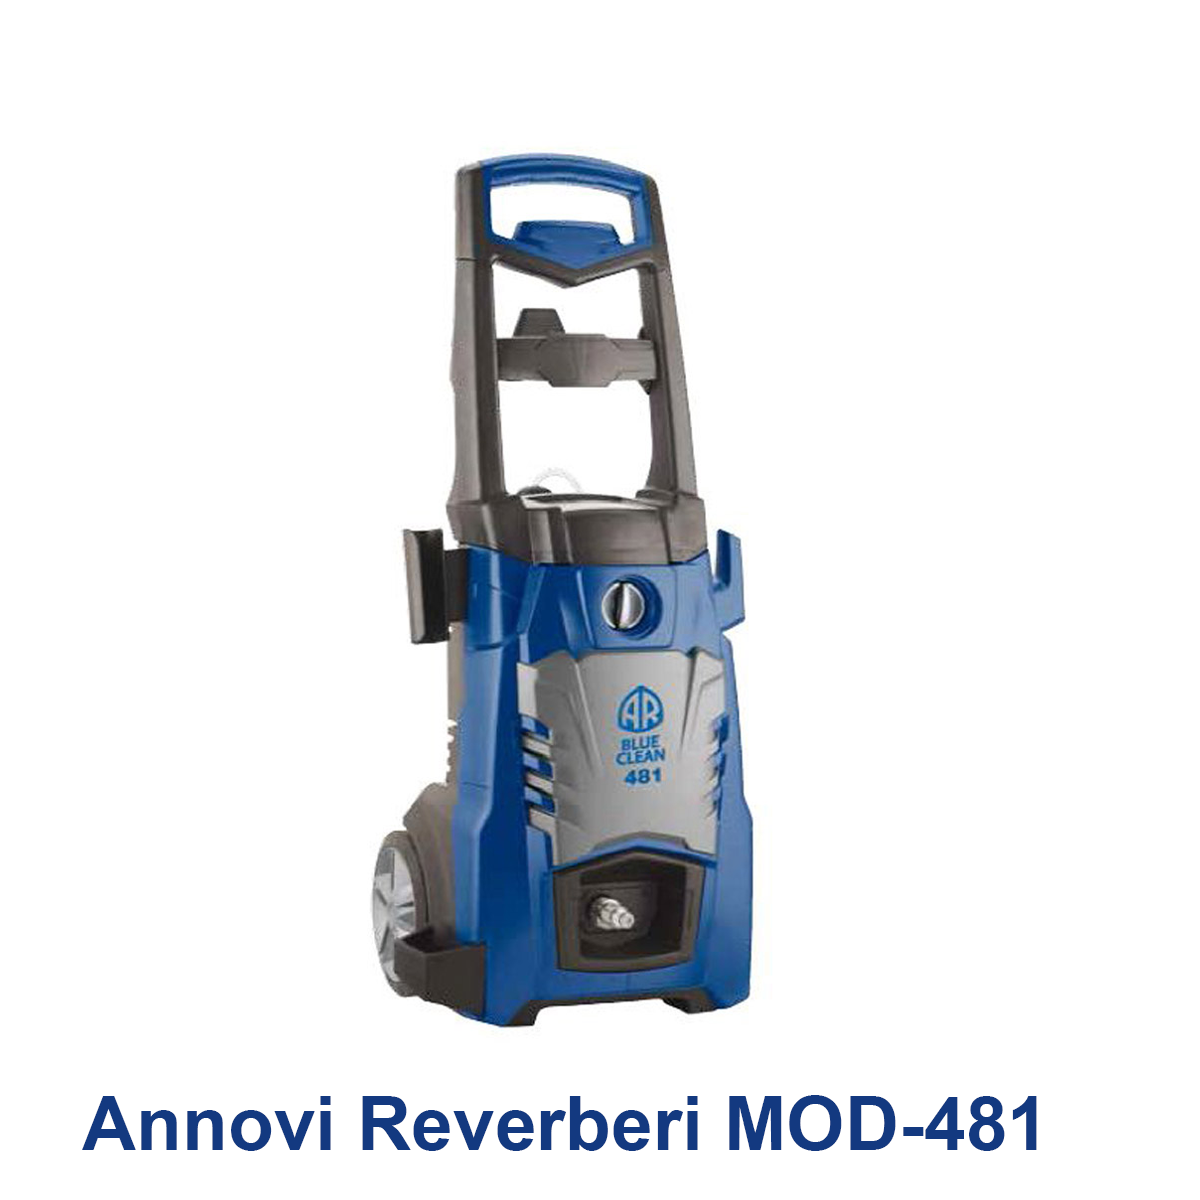 Annovi-Reverberi-MOD-481